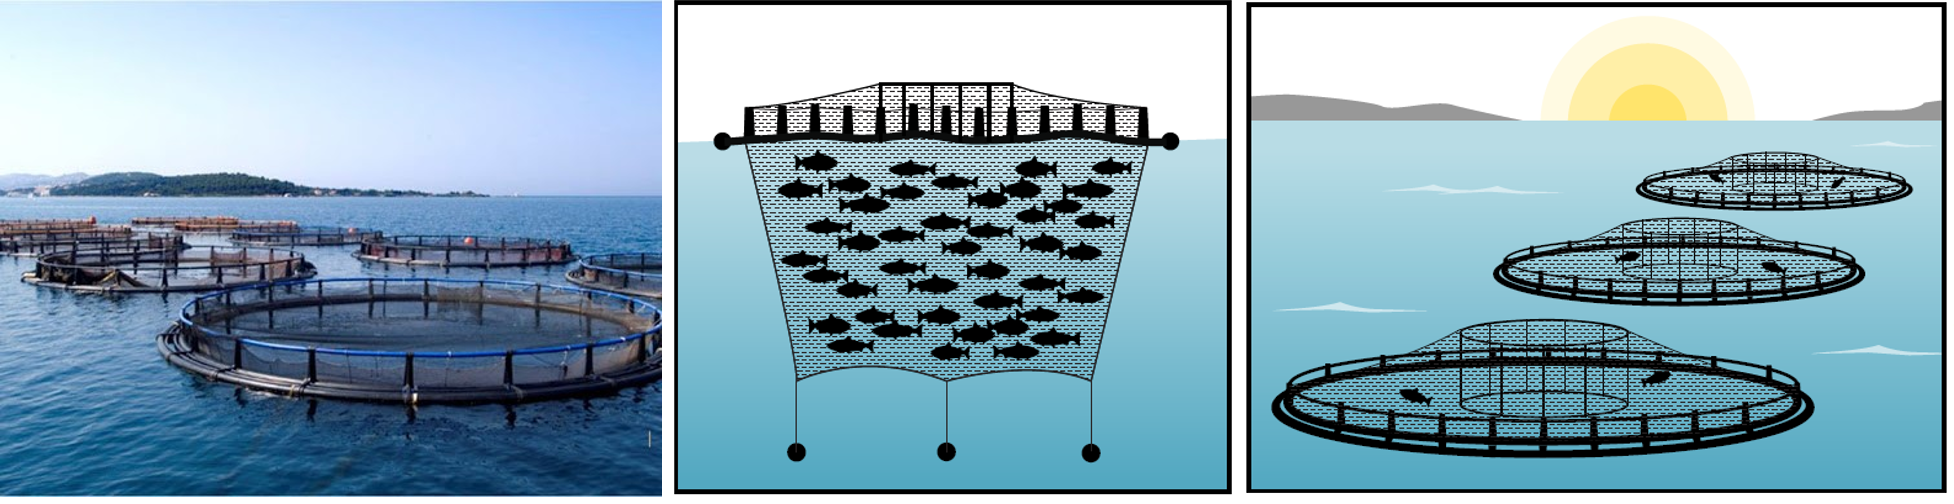 métodos de cultivo jaulas de salmón